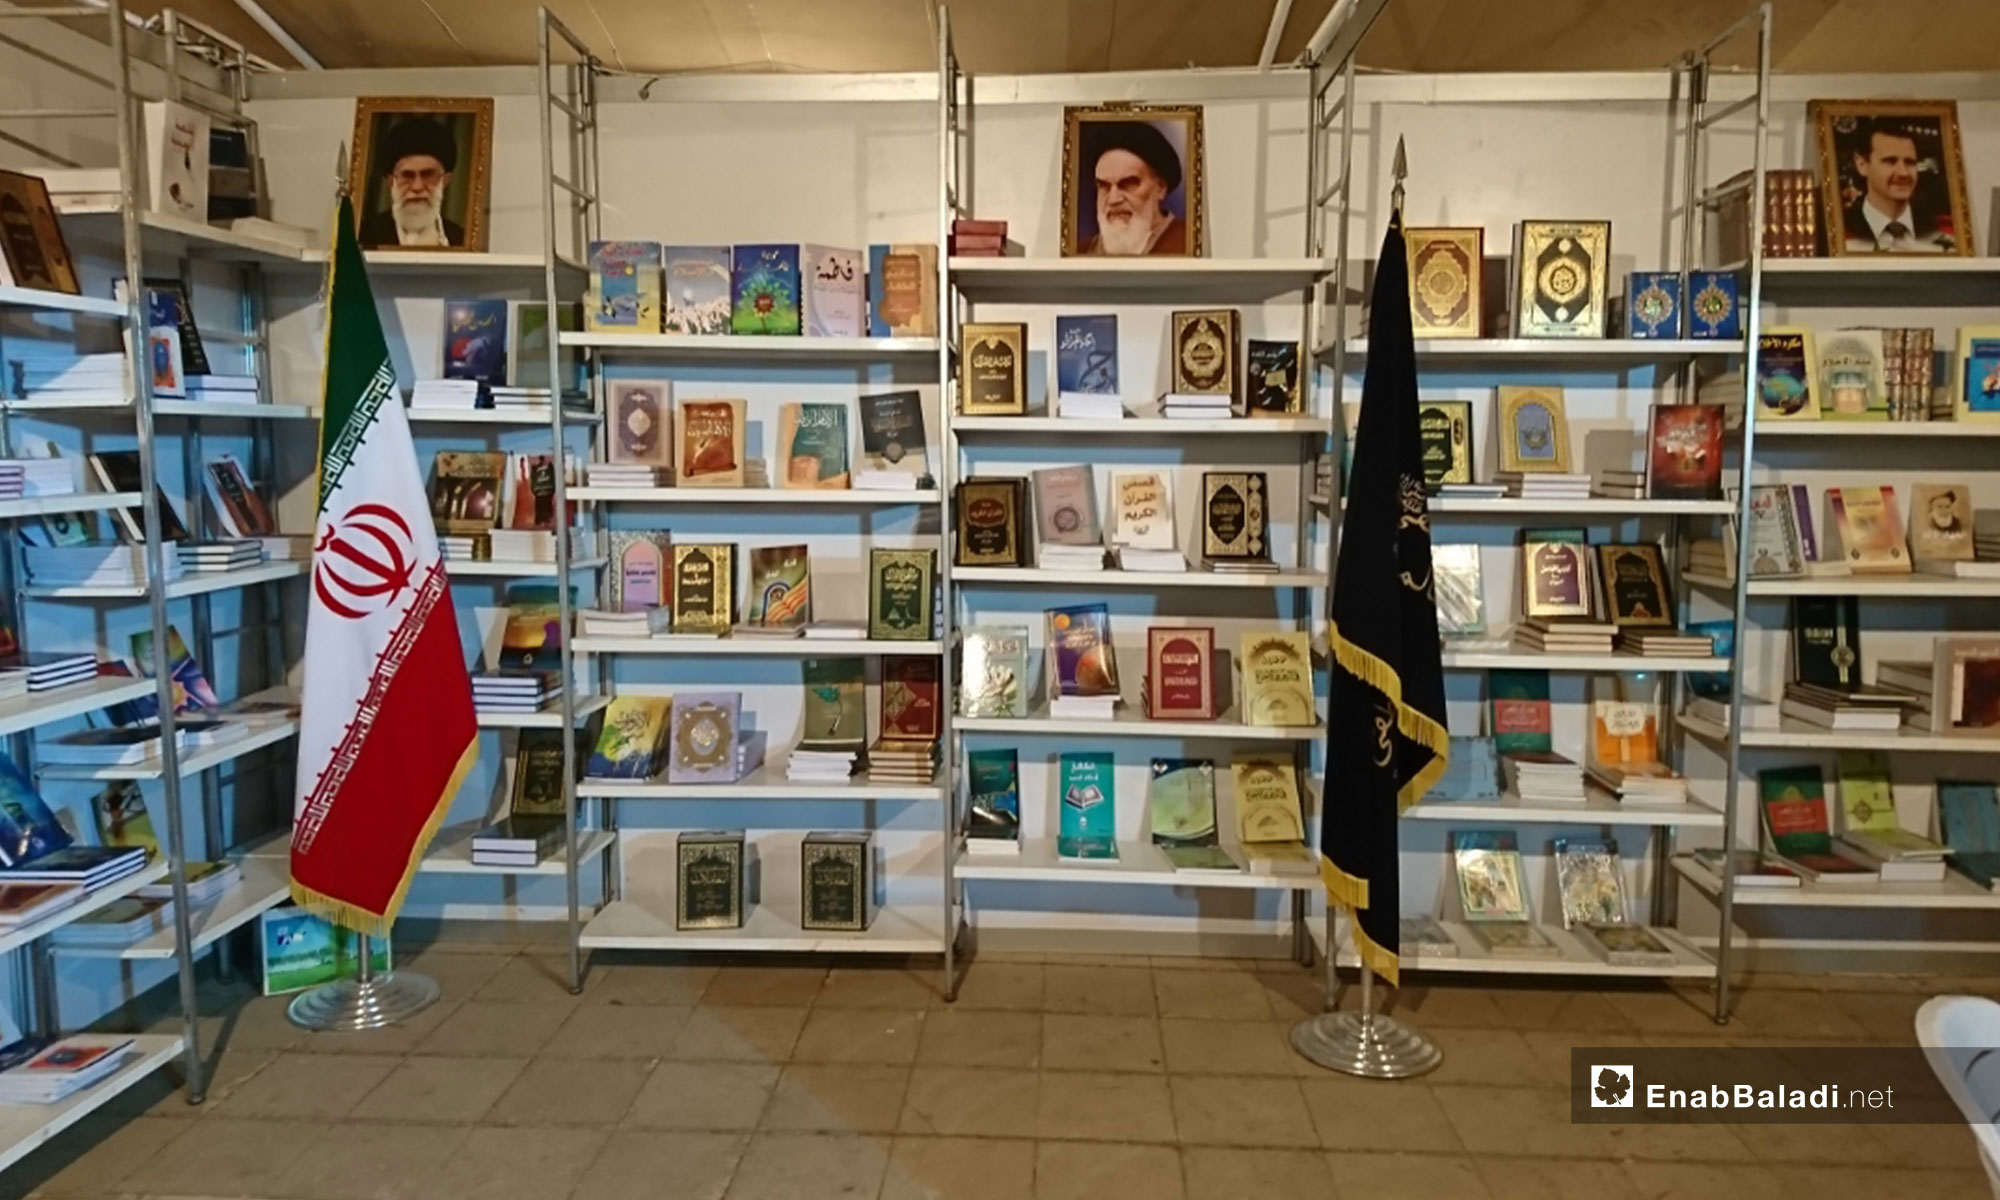 Iranian publishing house, the Book Fair in Damascus - August 8, 2018 (Enab Baladi)